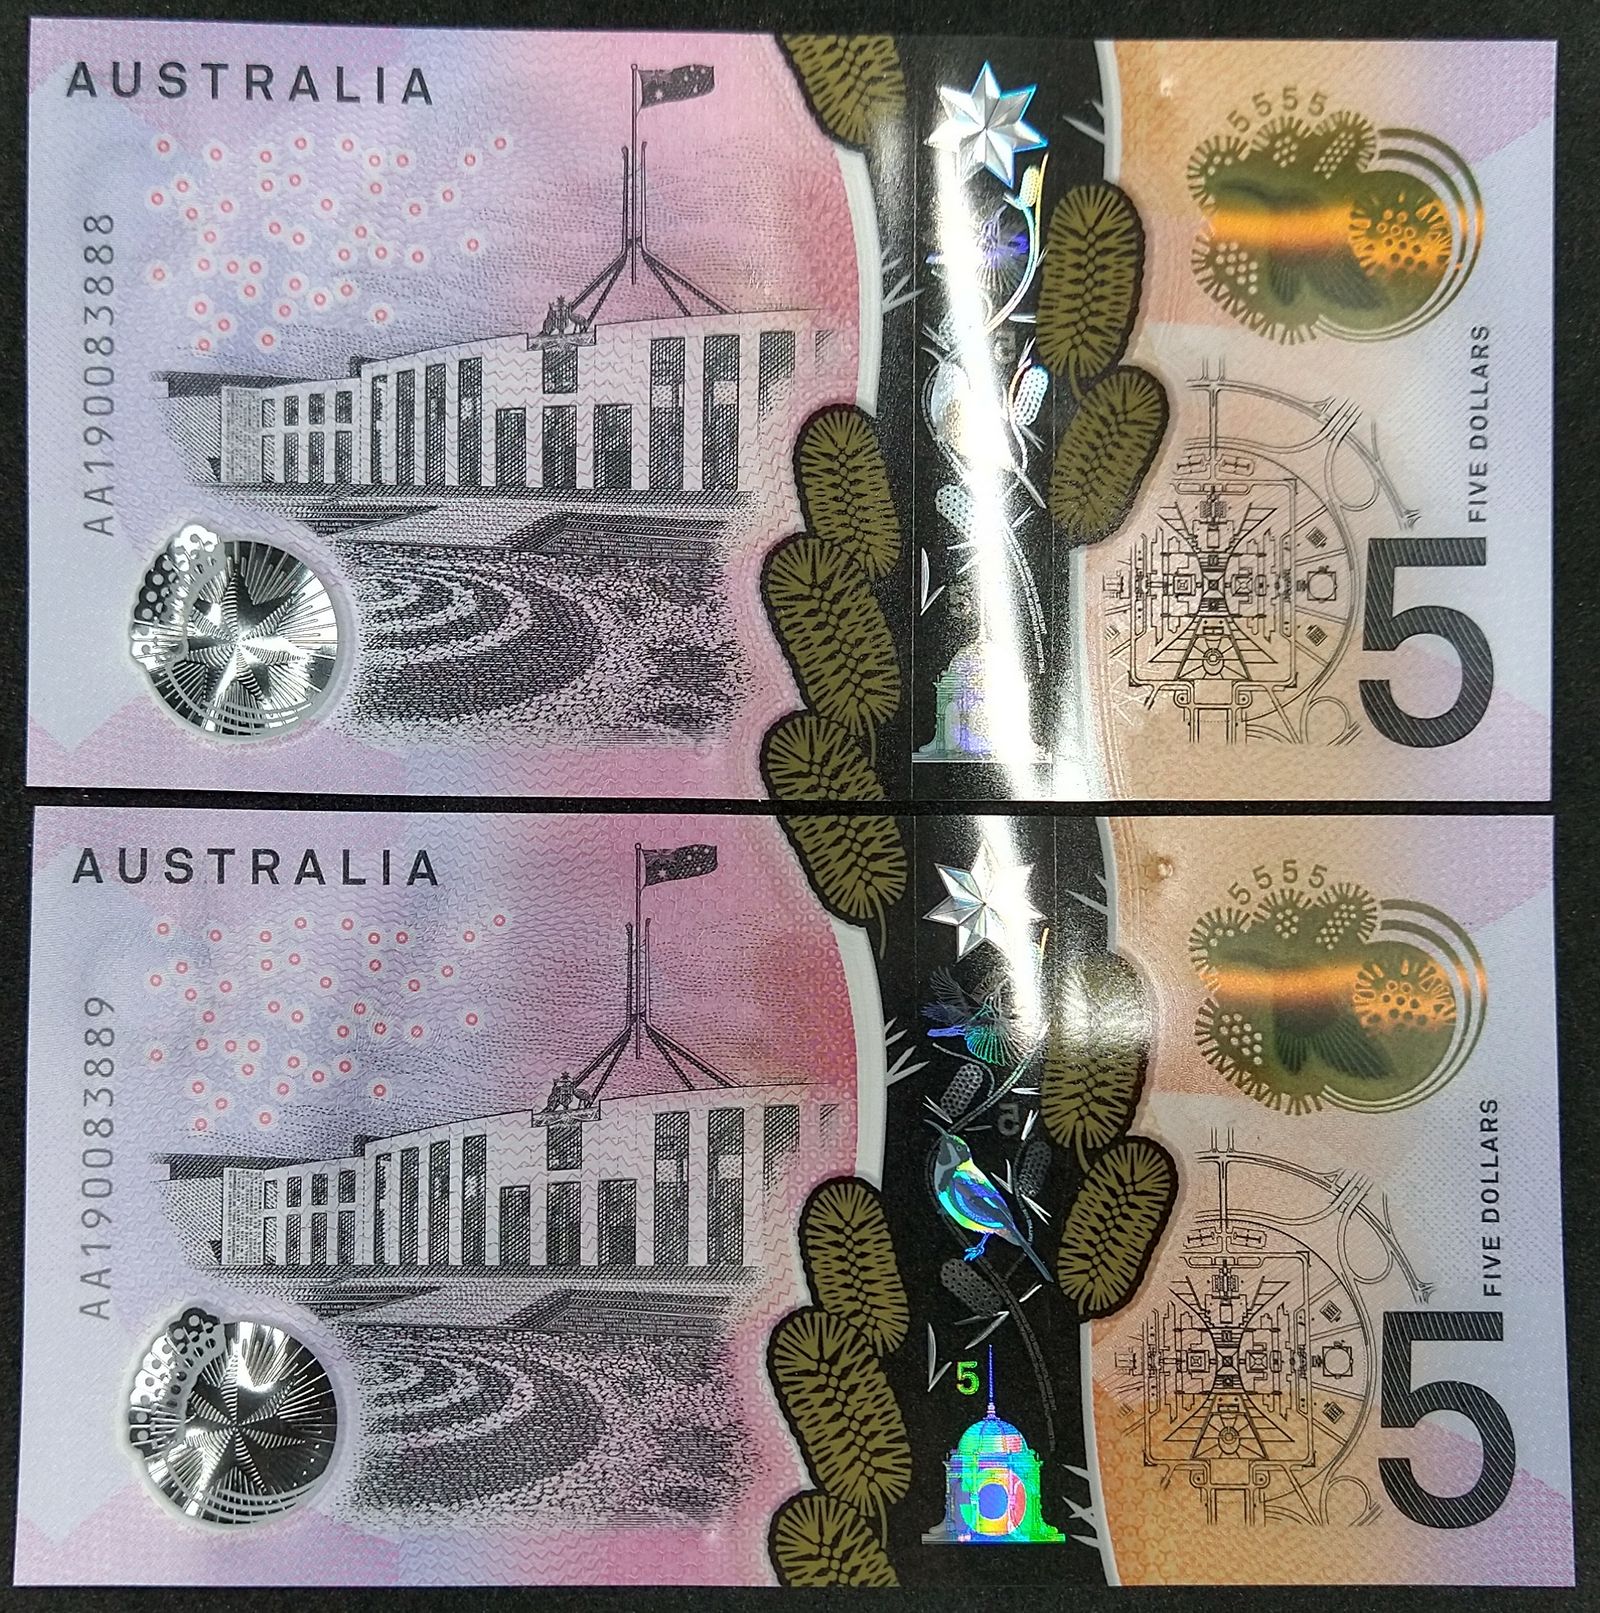 Australia 2019 $5 Lowe / First Prefix Uncirculated - The Purple Penny